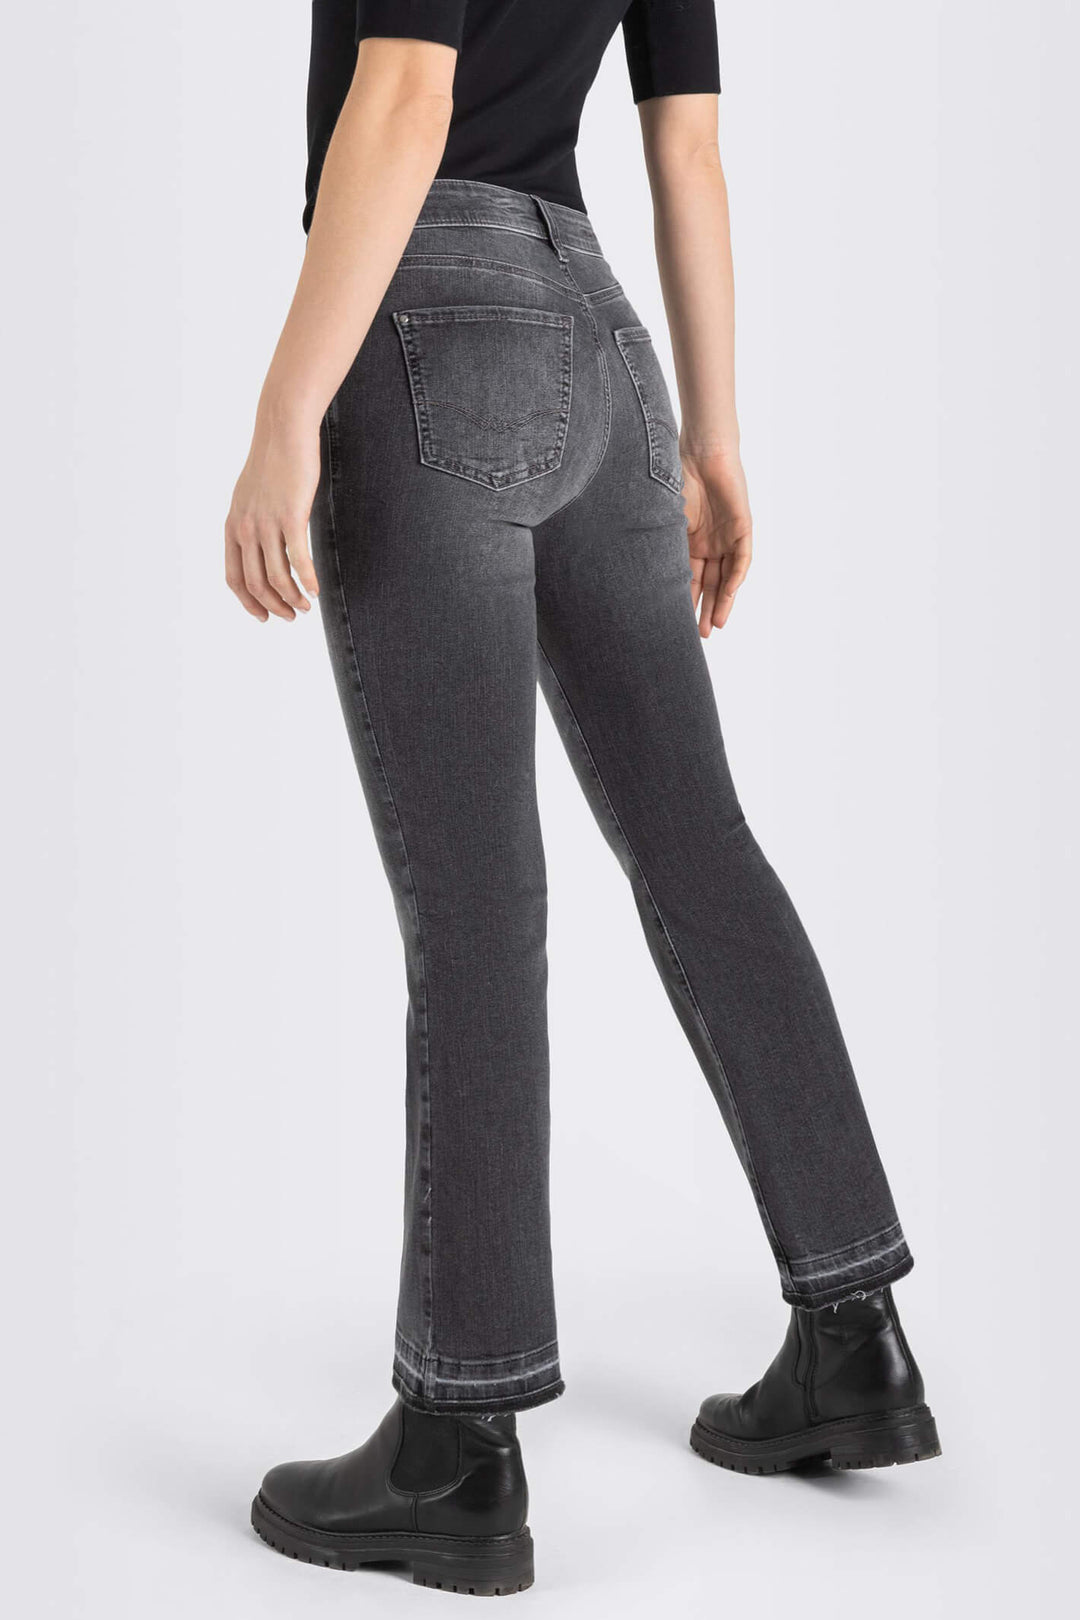 Mac 5458-90-0357 D926 Anthra Grey Net Wash Dream Kick Open Hem Jeans - Olivia Grace Fashion